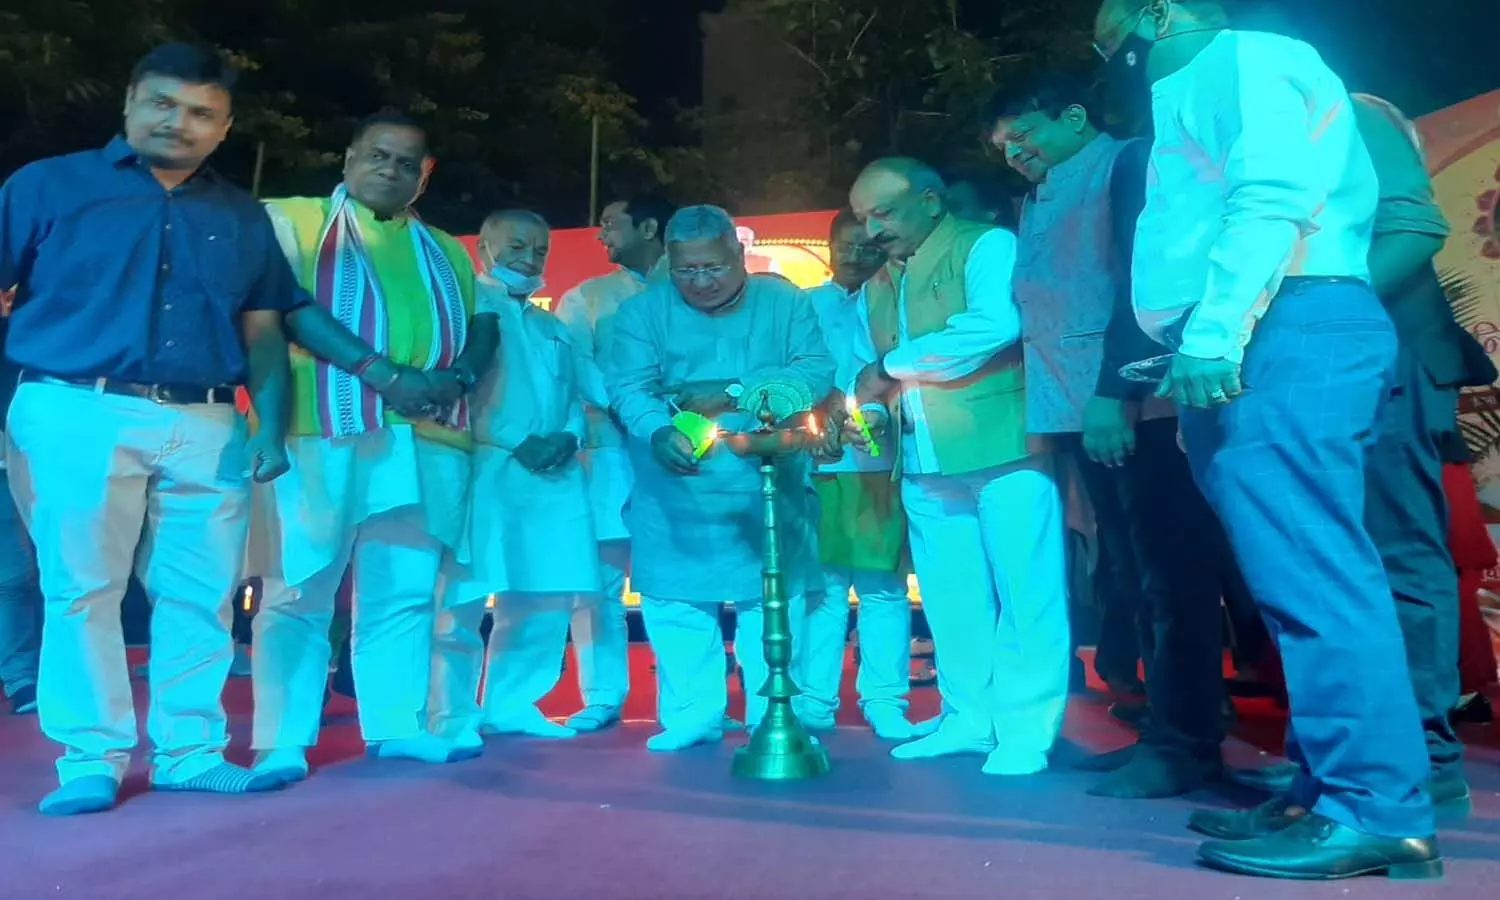 Meerut MP Rajendra Agrawal inaugurated the Diwali fair at Bhainsali ground